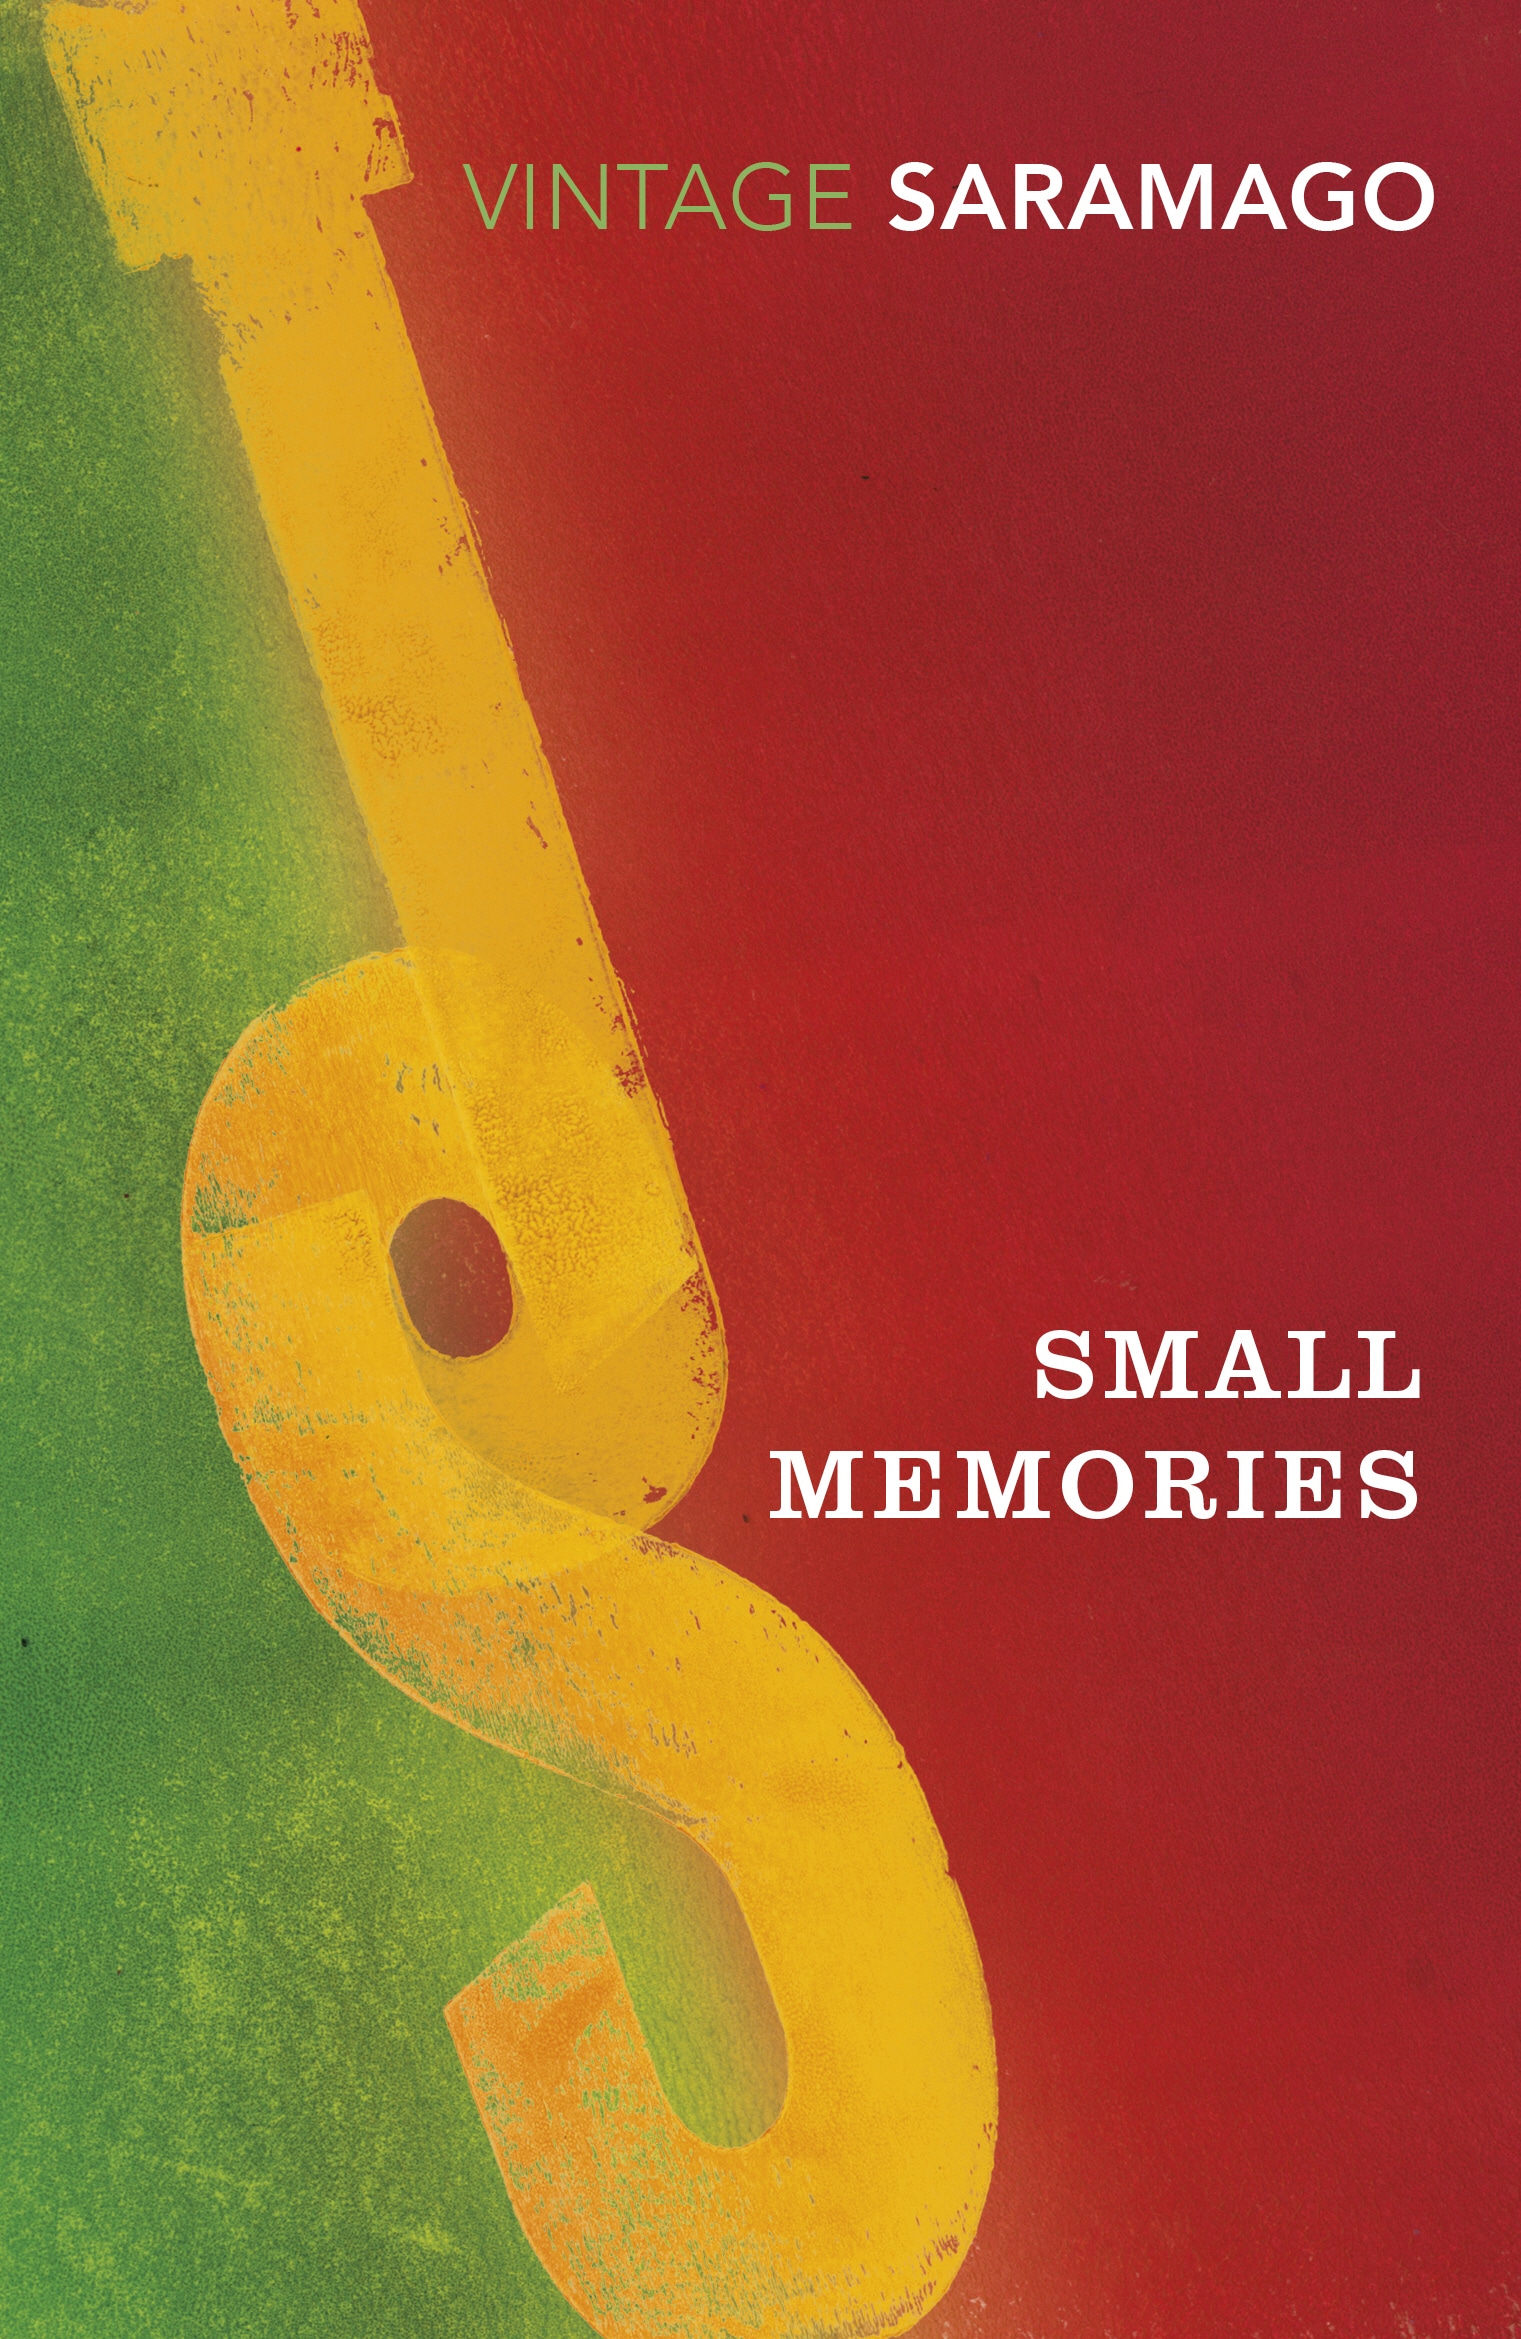 Book “Small Memories” by José Saramago — August 1, 2019